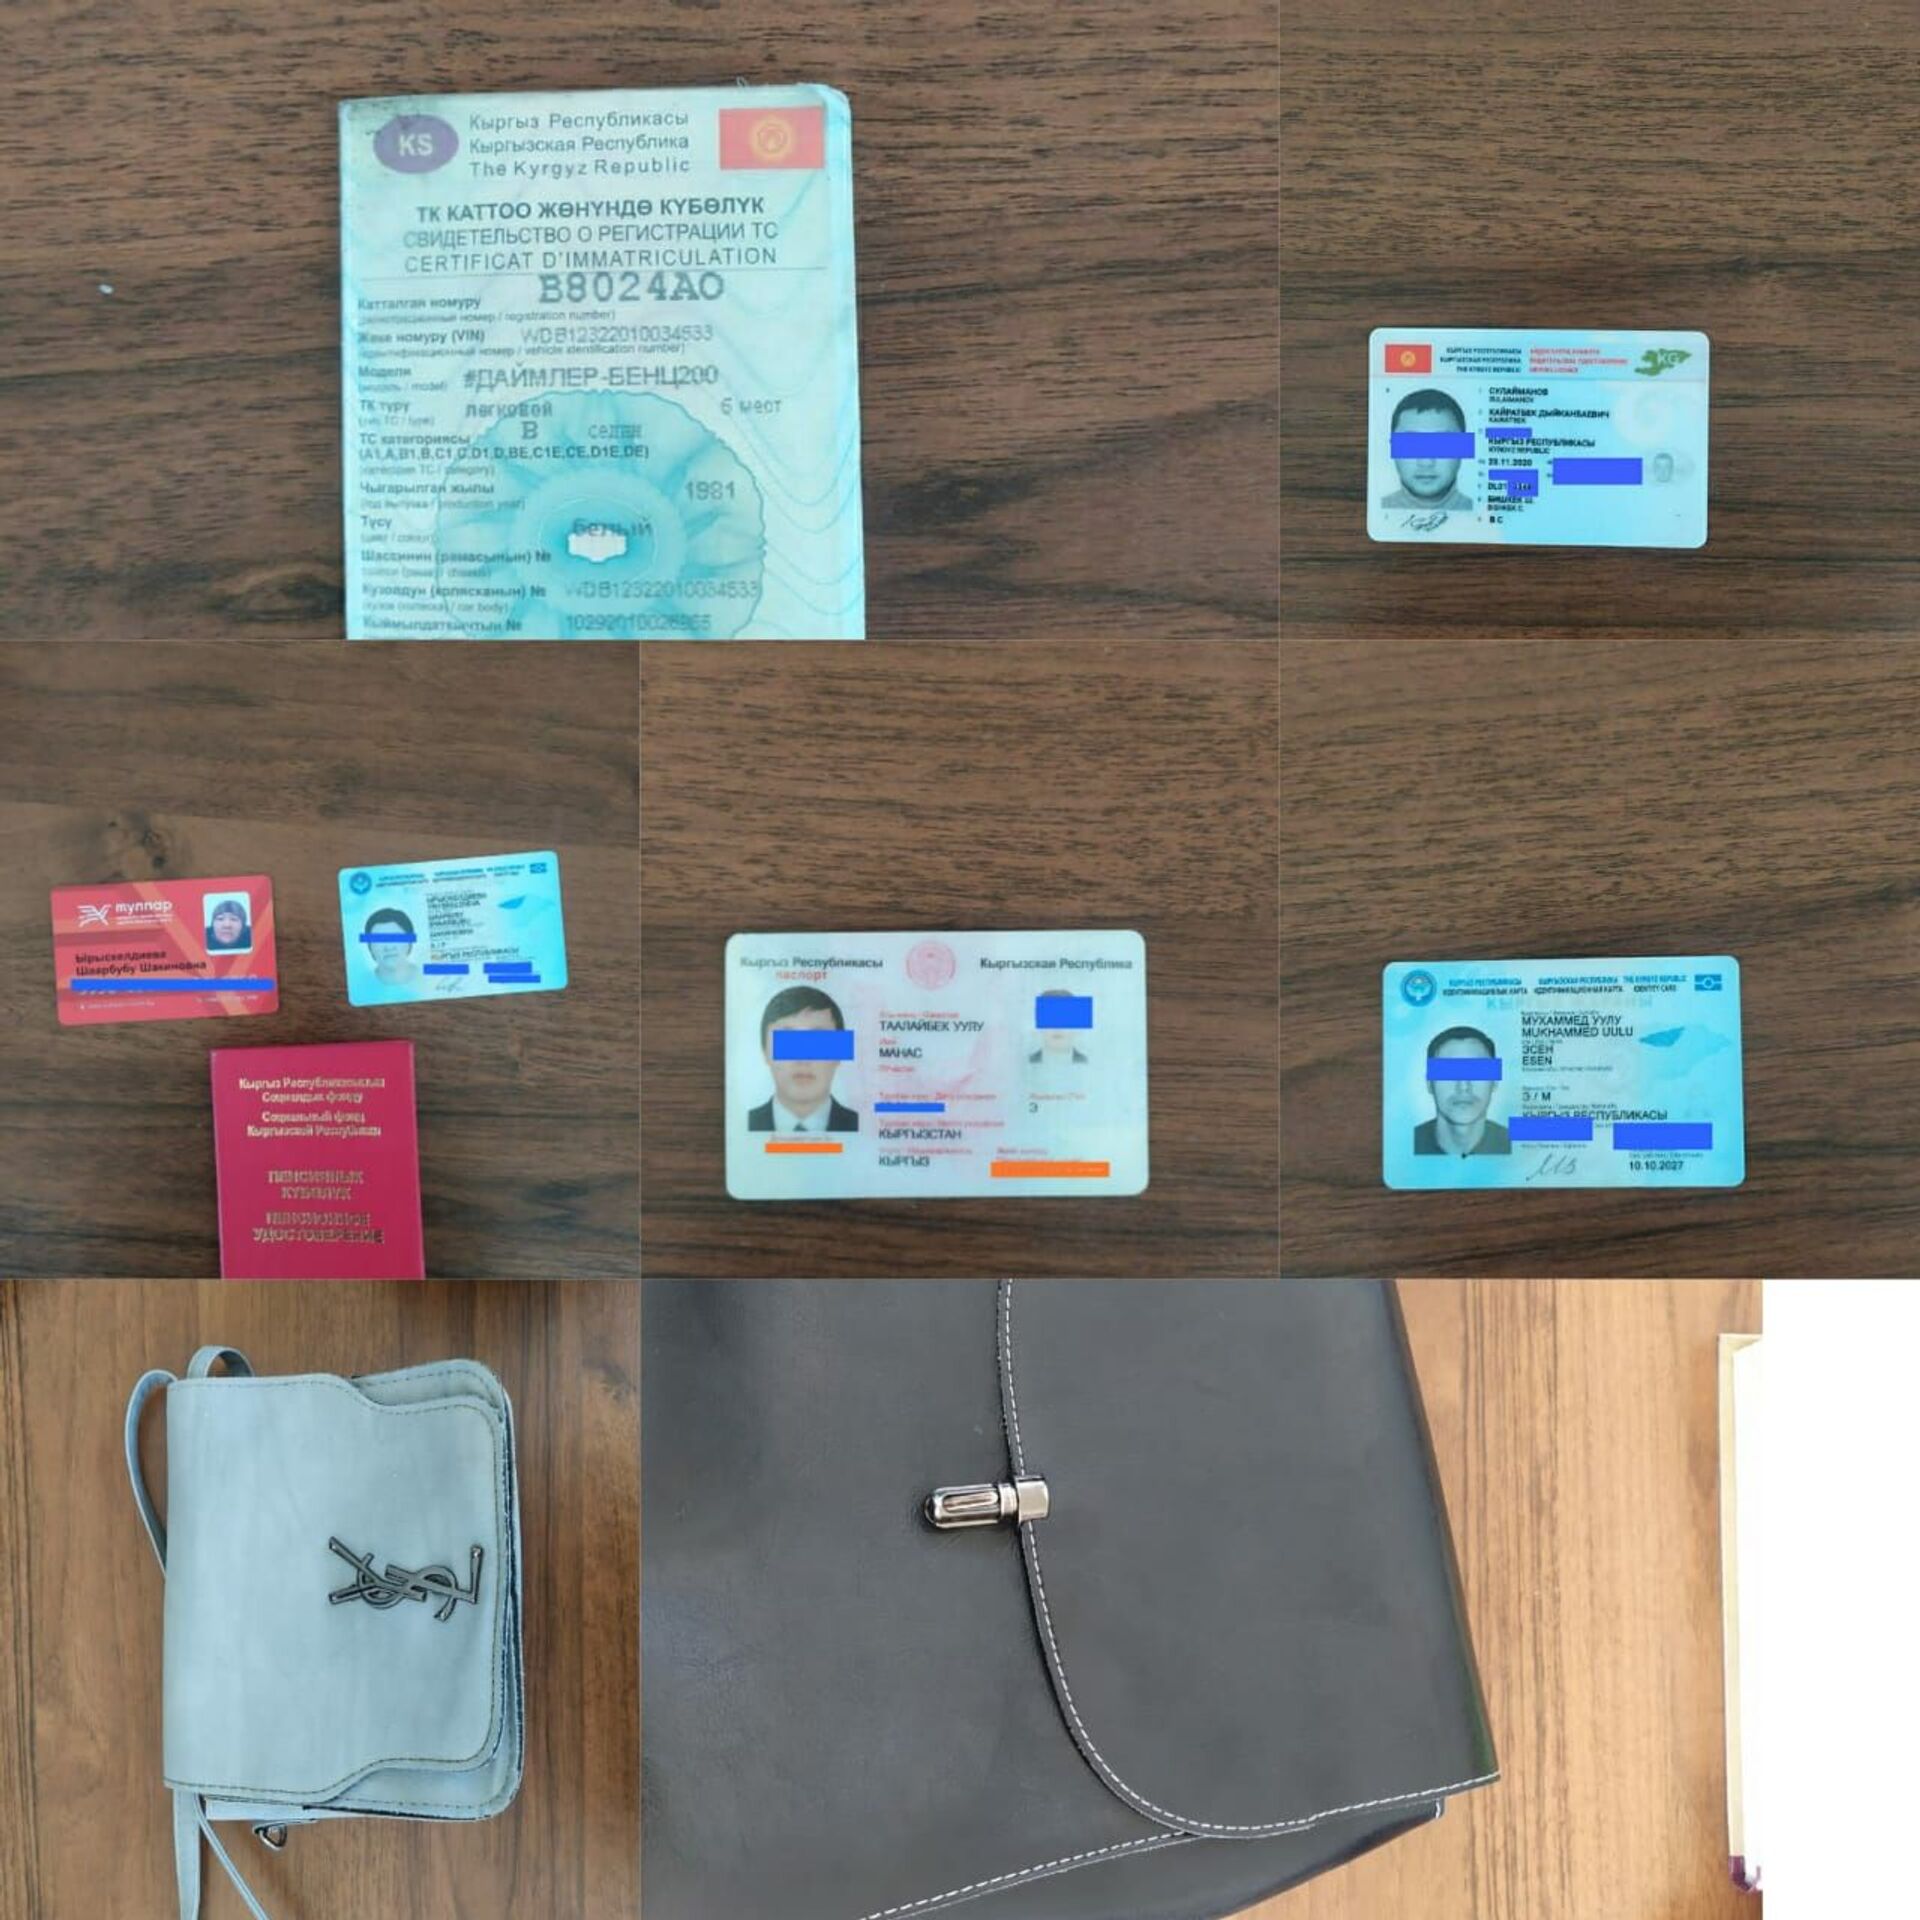 Женские сумки, паспорта — какие вещи теряют на площади Ала-Тоо. Фото - Sputnik Кыргызстан, 1920, 09.08.2021